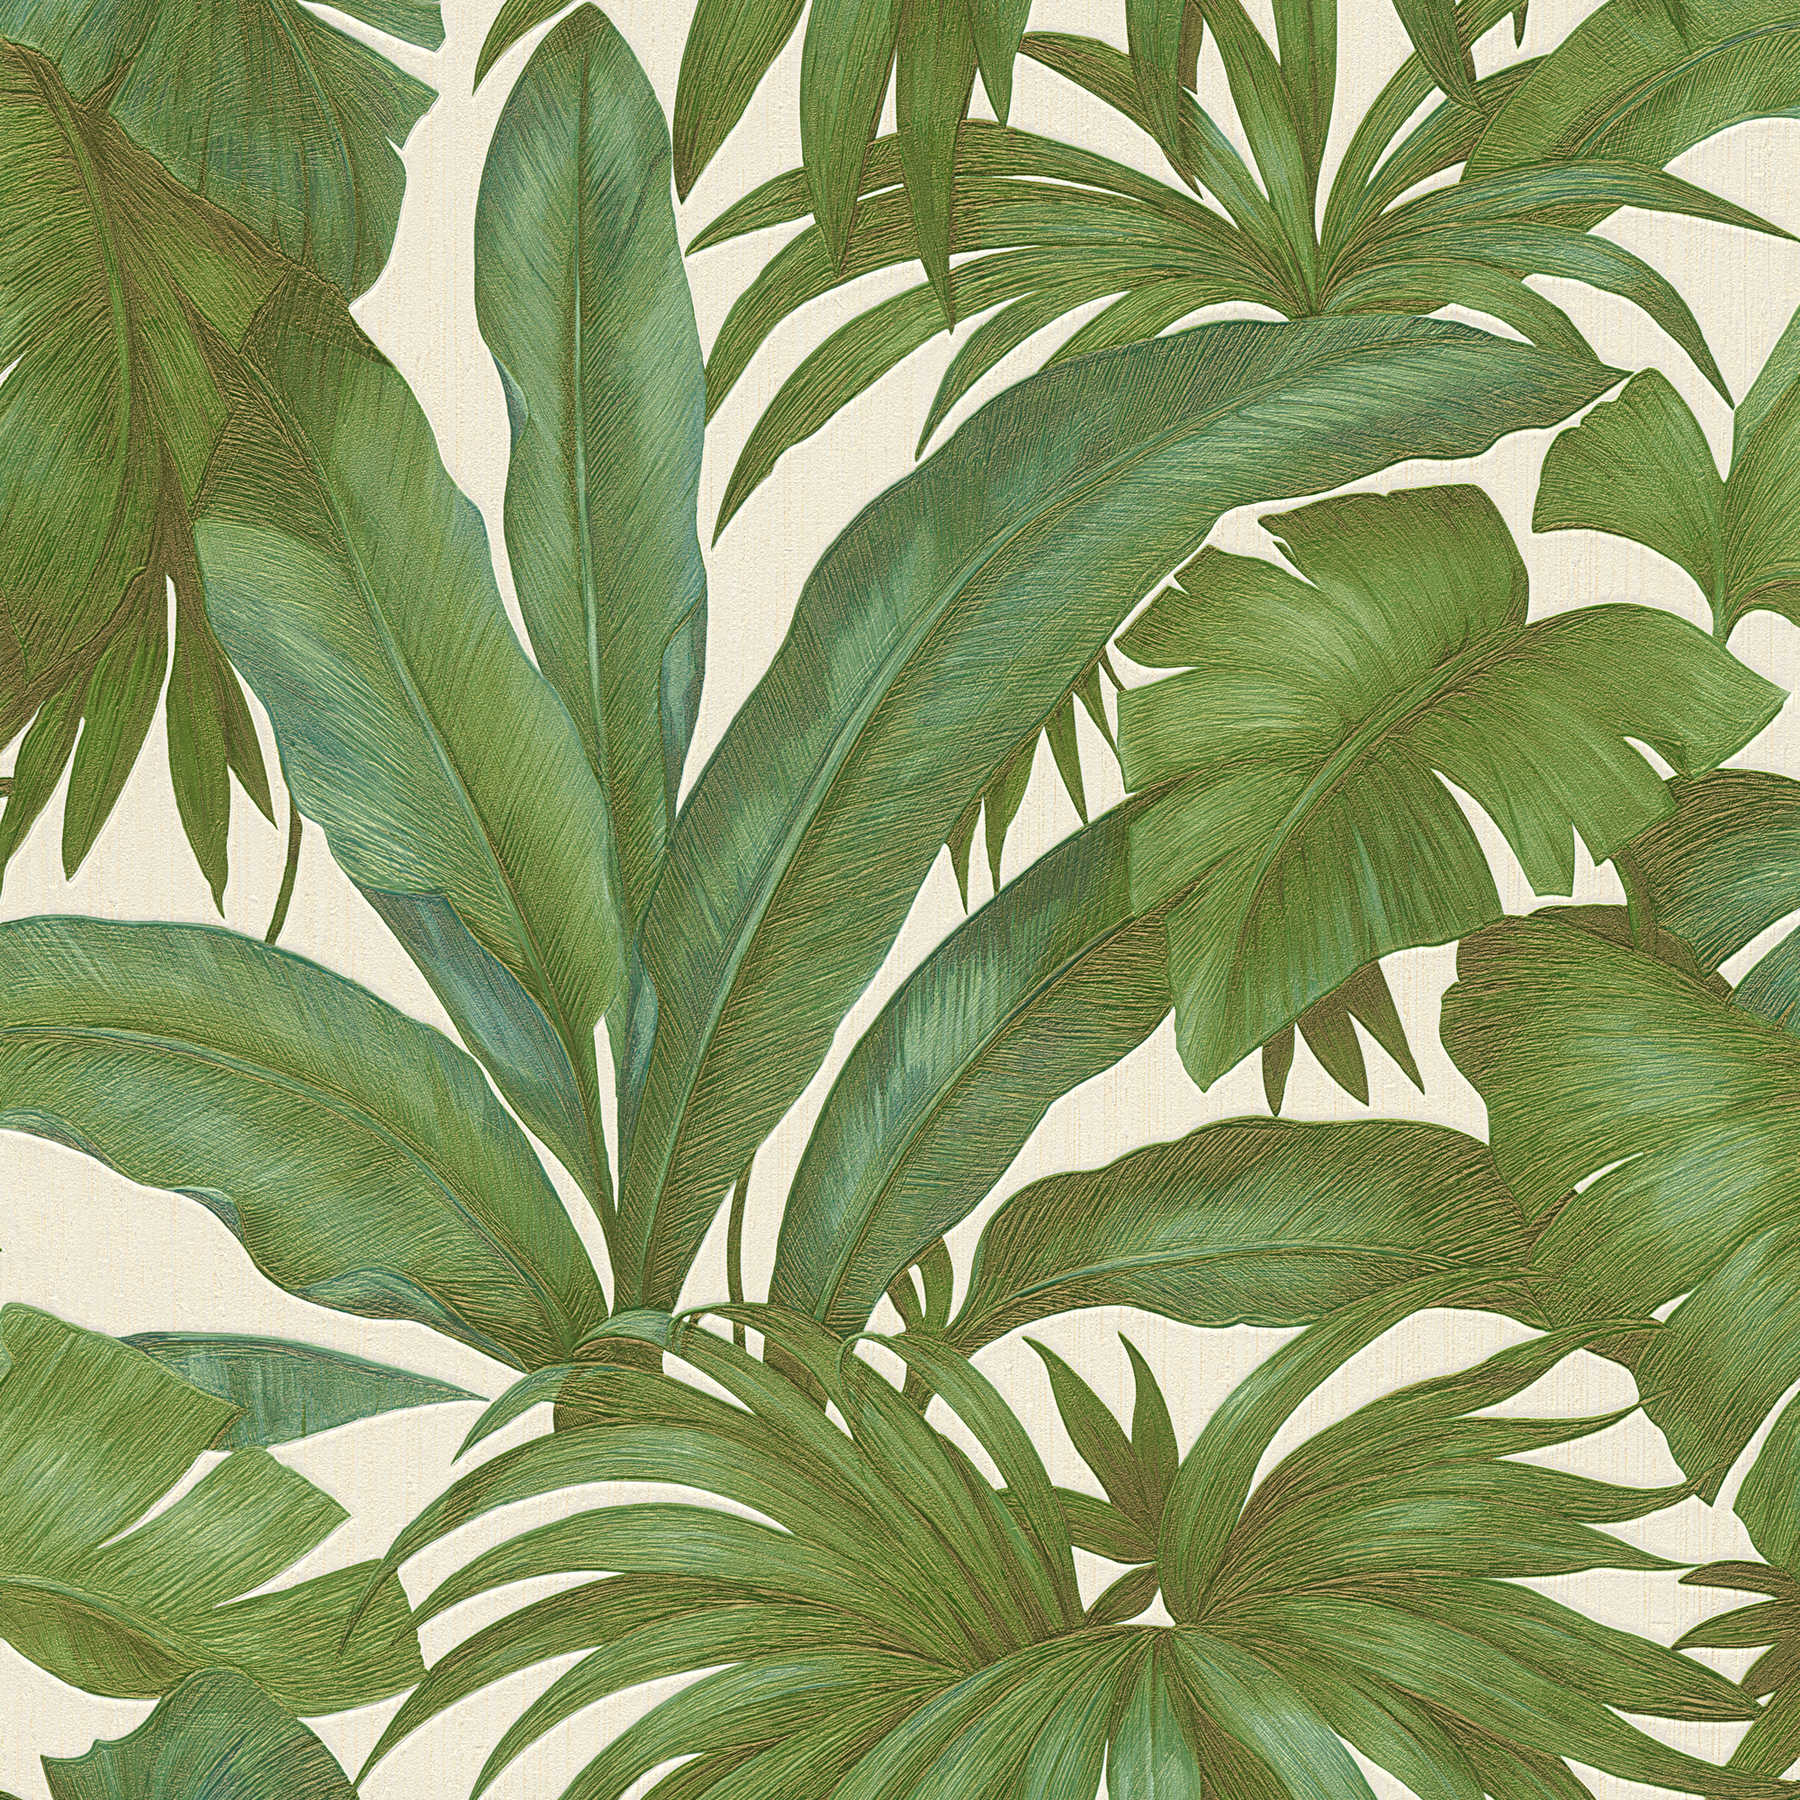         VERSACE wallpaper palm motif - beige, green, metallic
    